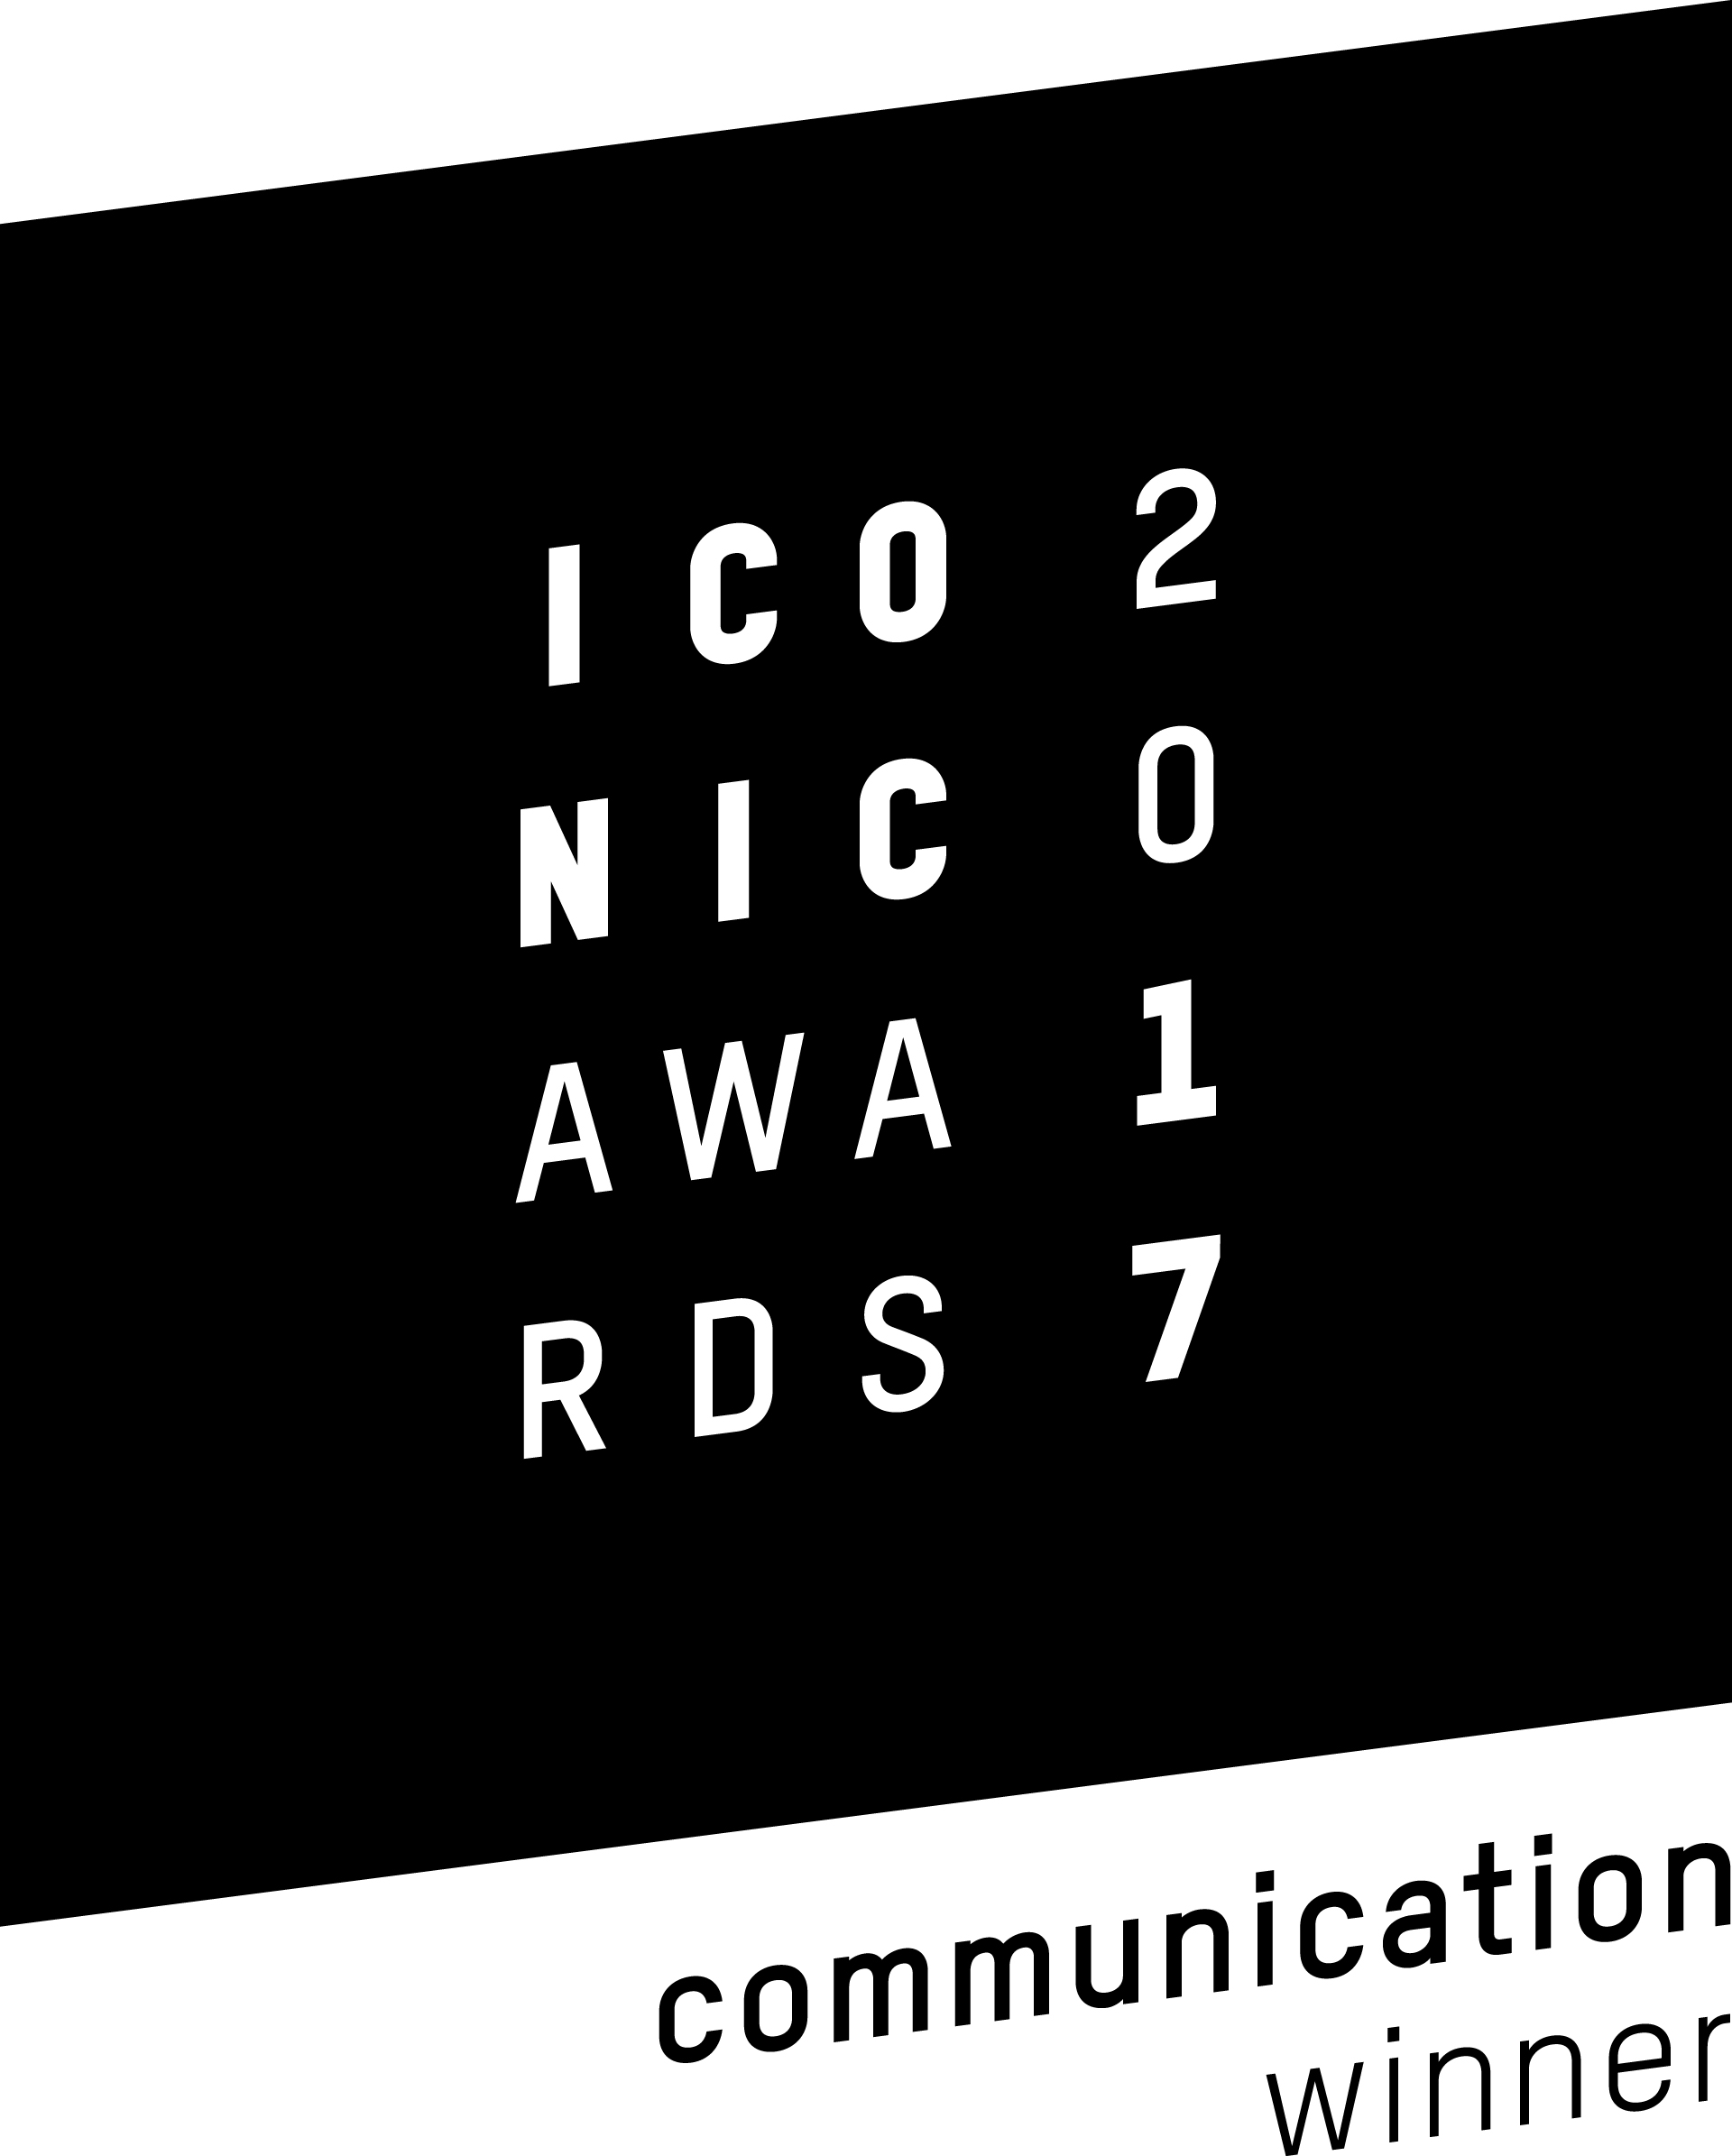 Iconic Award 2017 communication winner